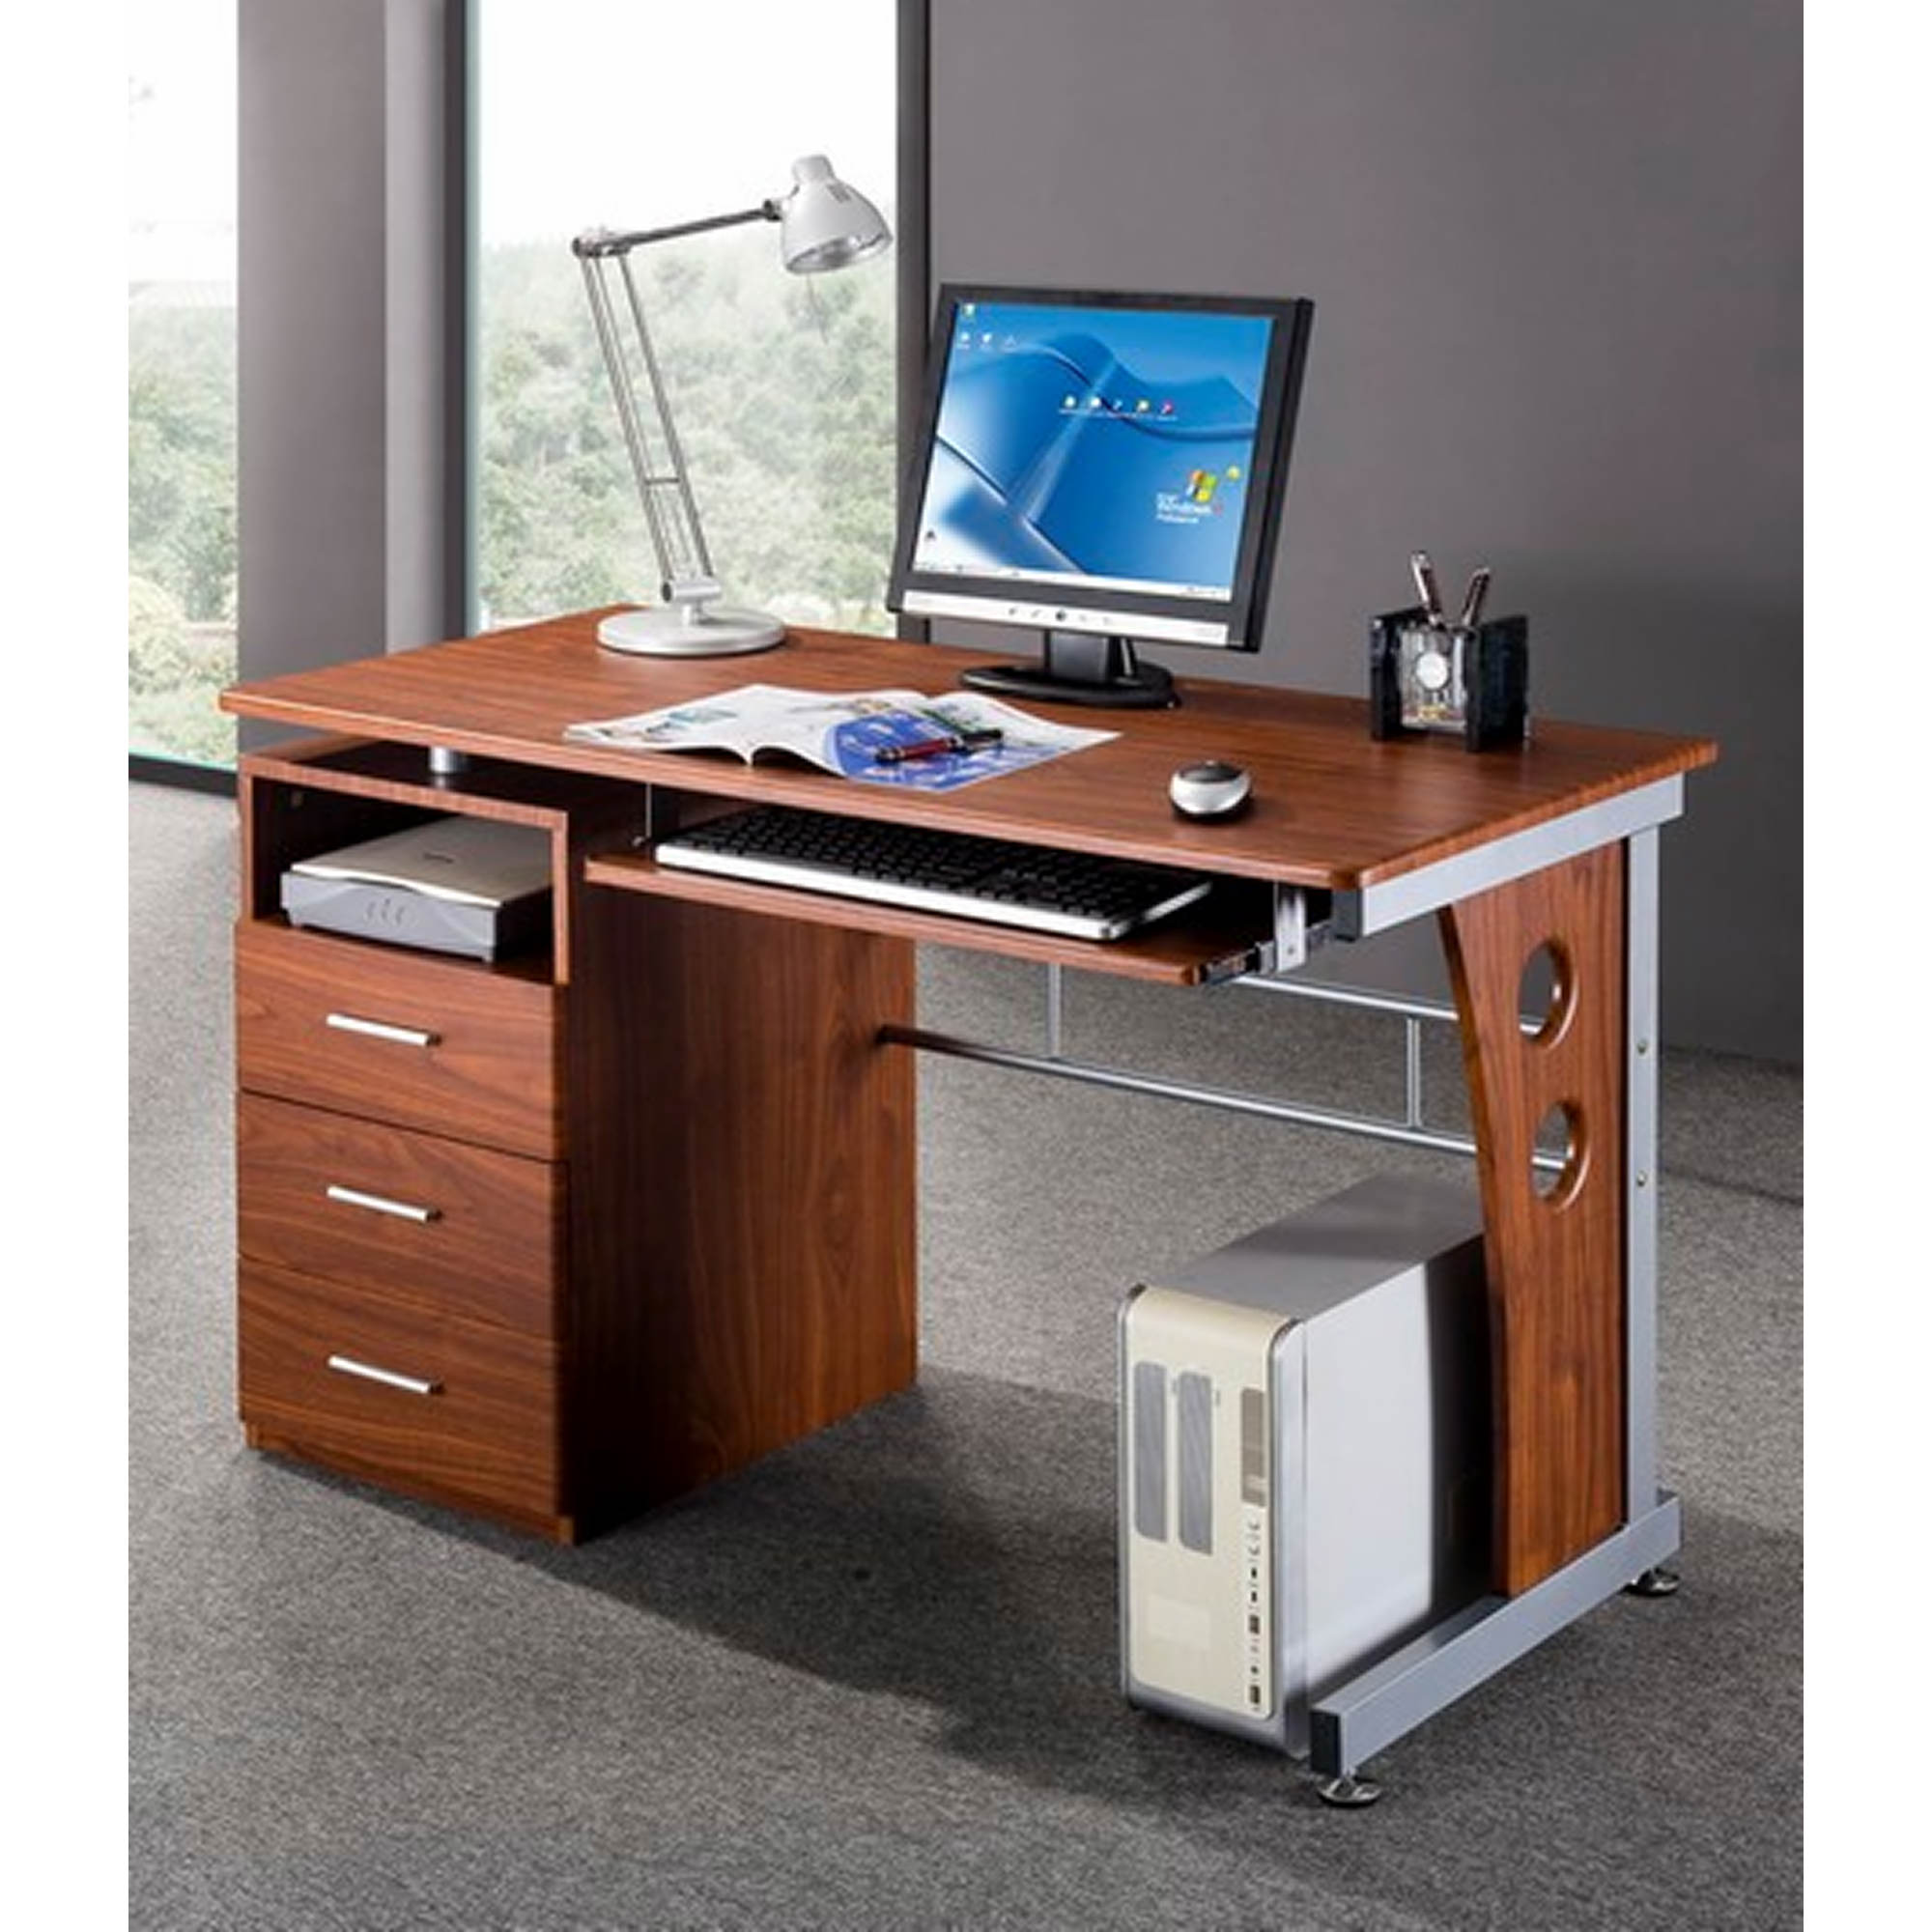 Rta Products Techni Mobili Computer Desk With Storage Mahogony